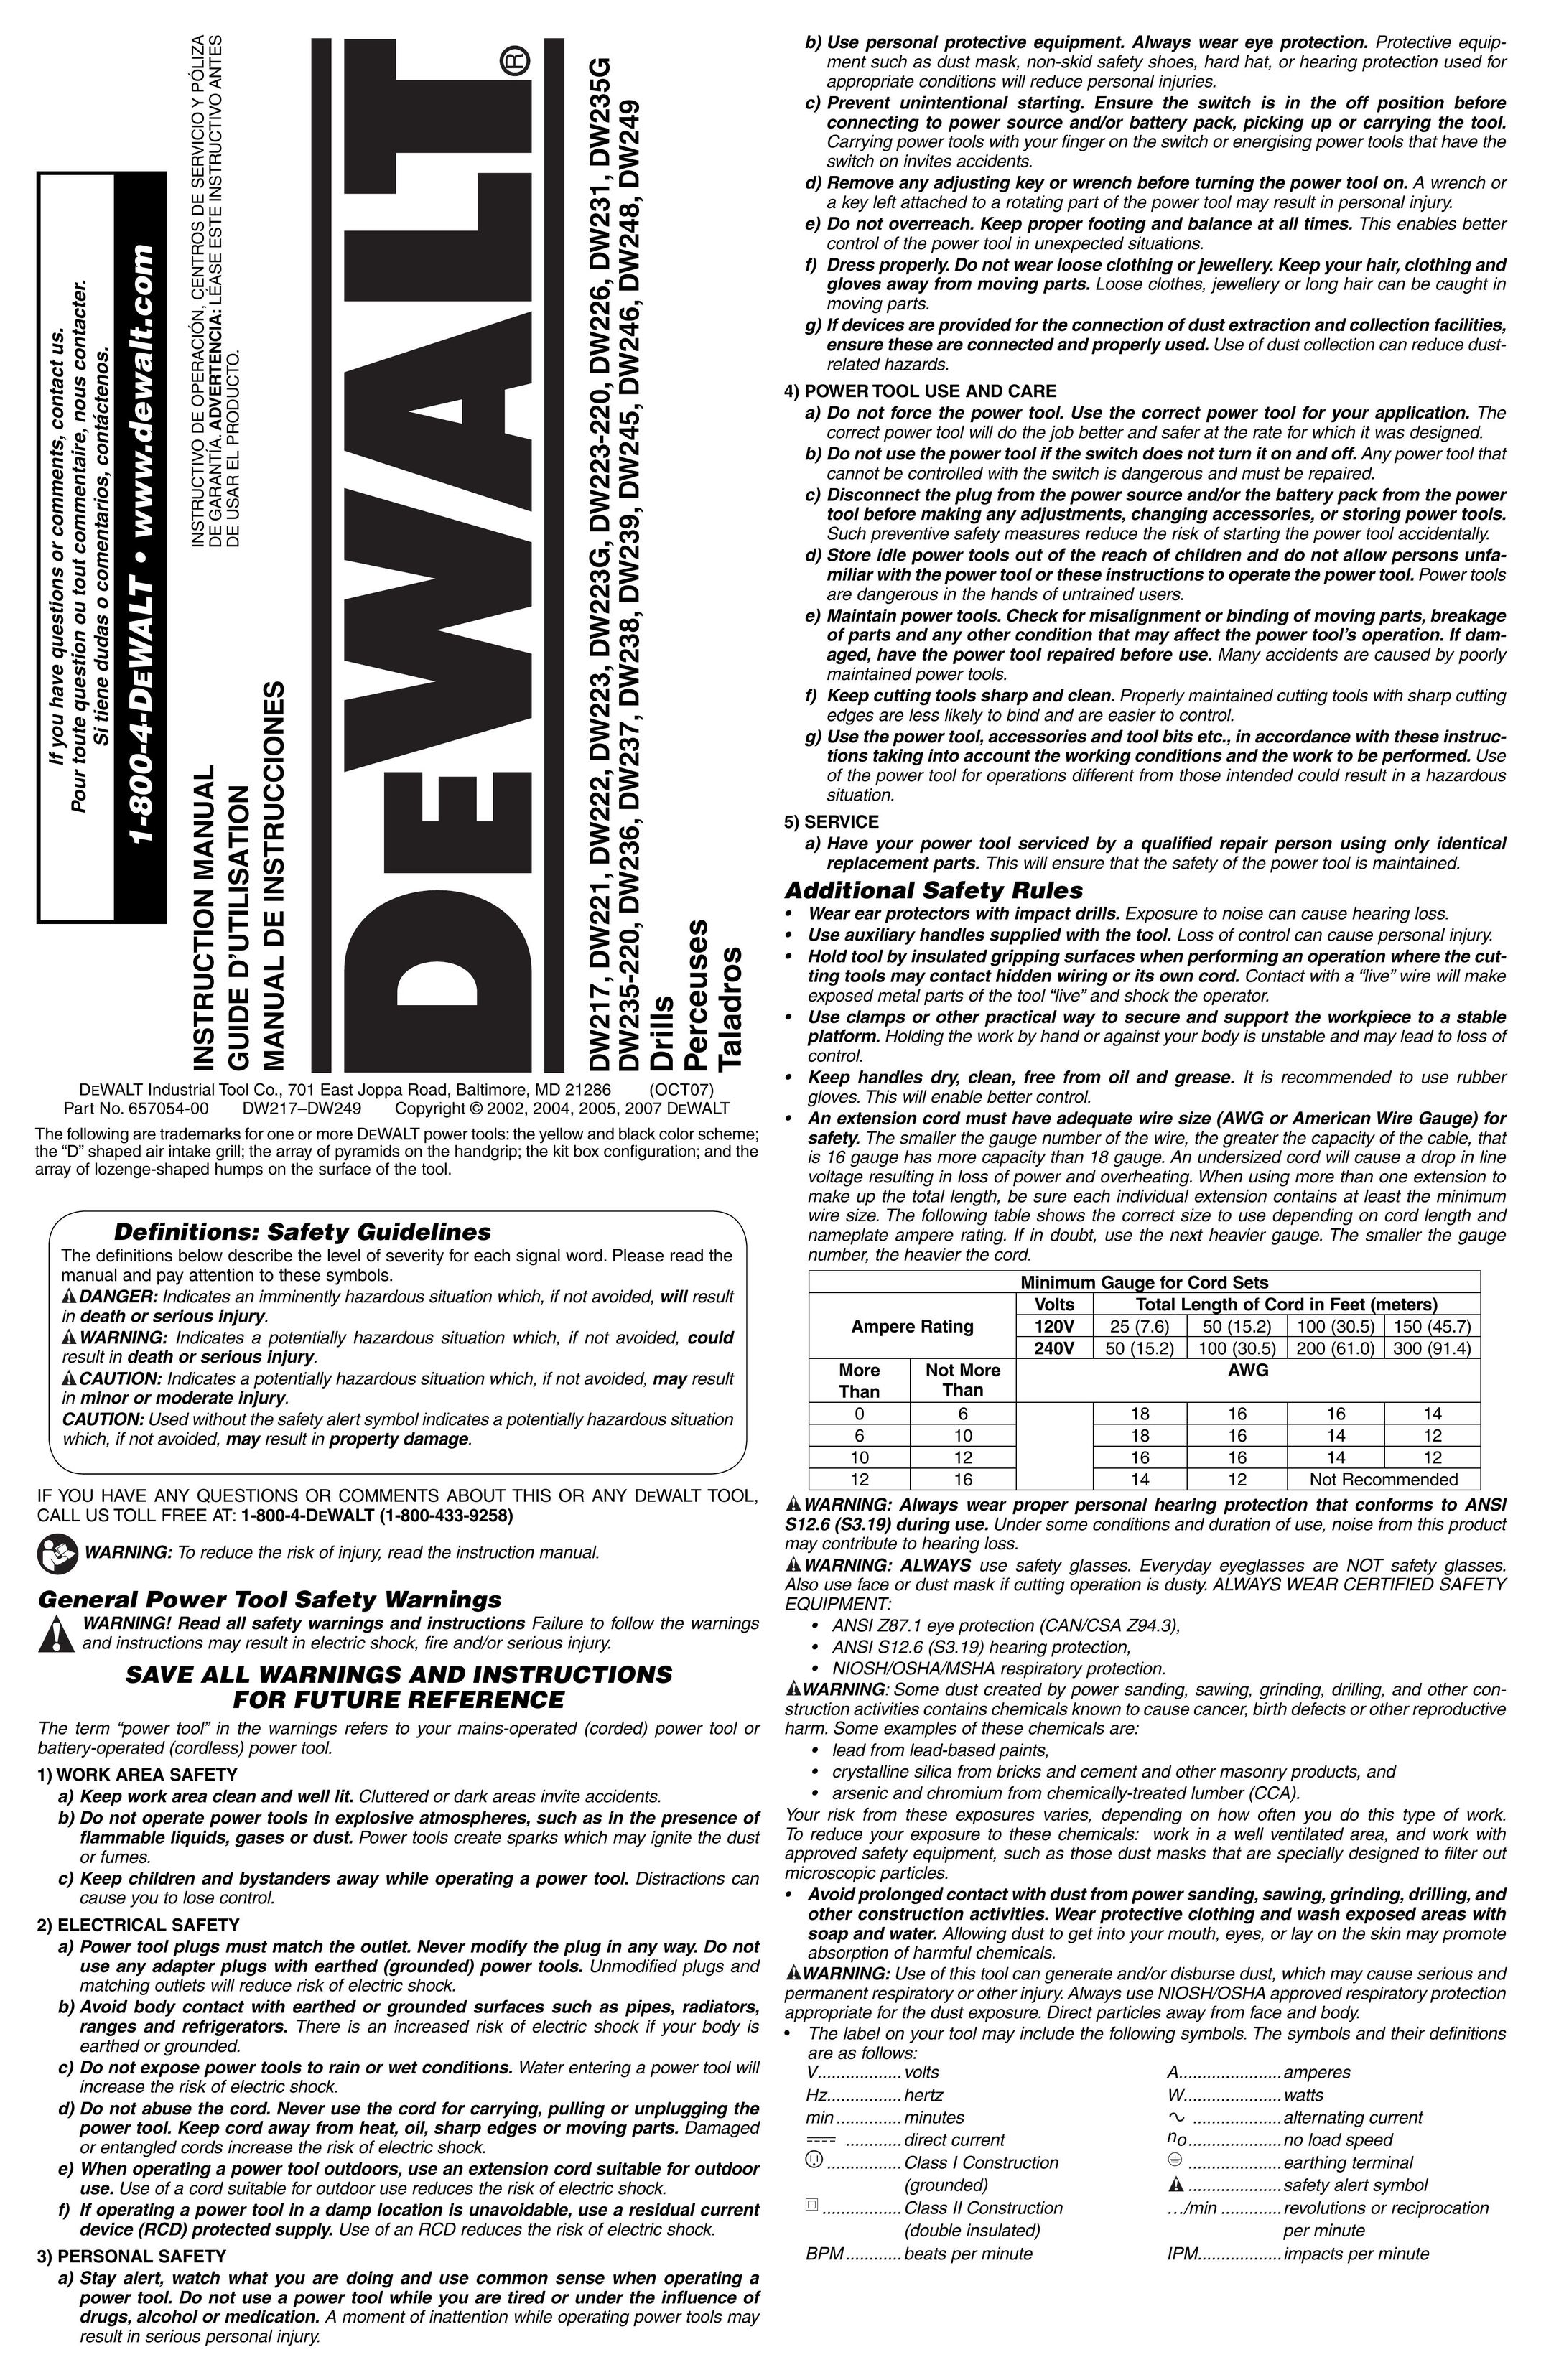 DeWalt DW238 Drill User Manual